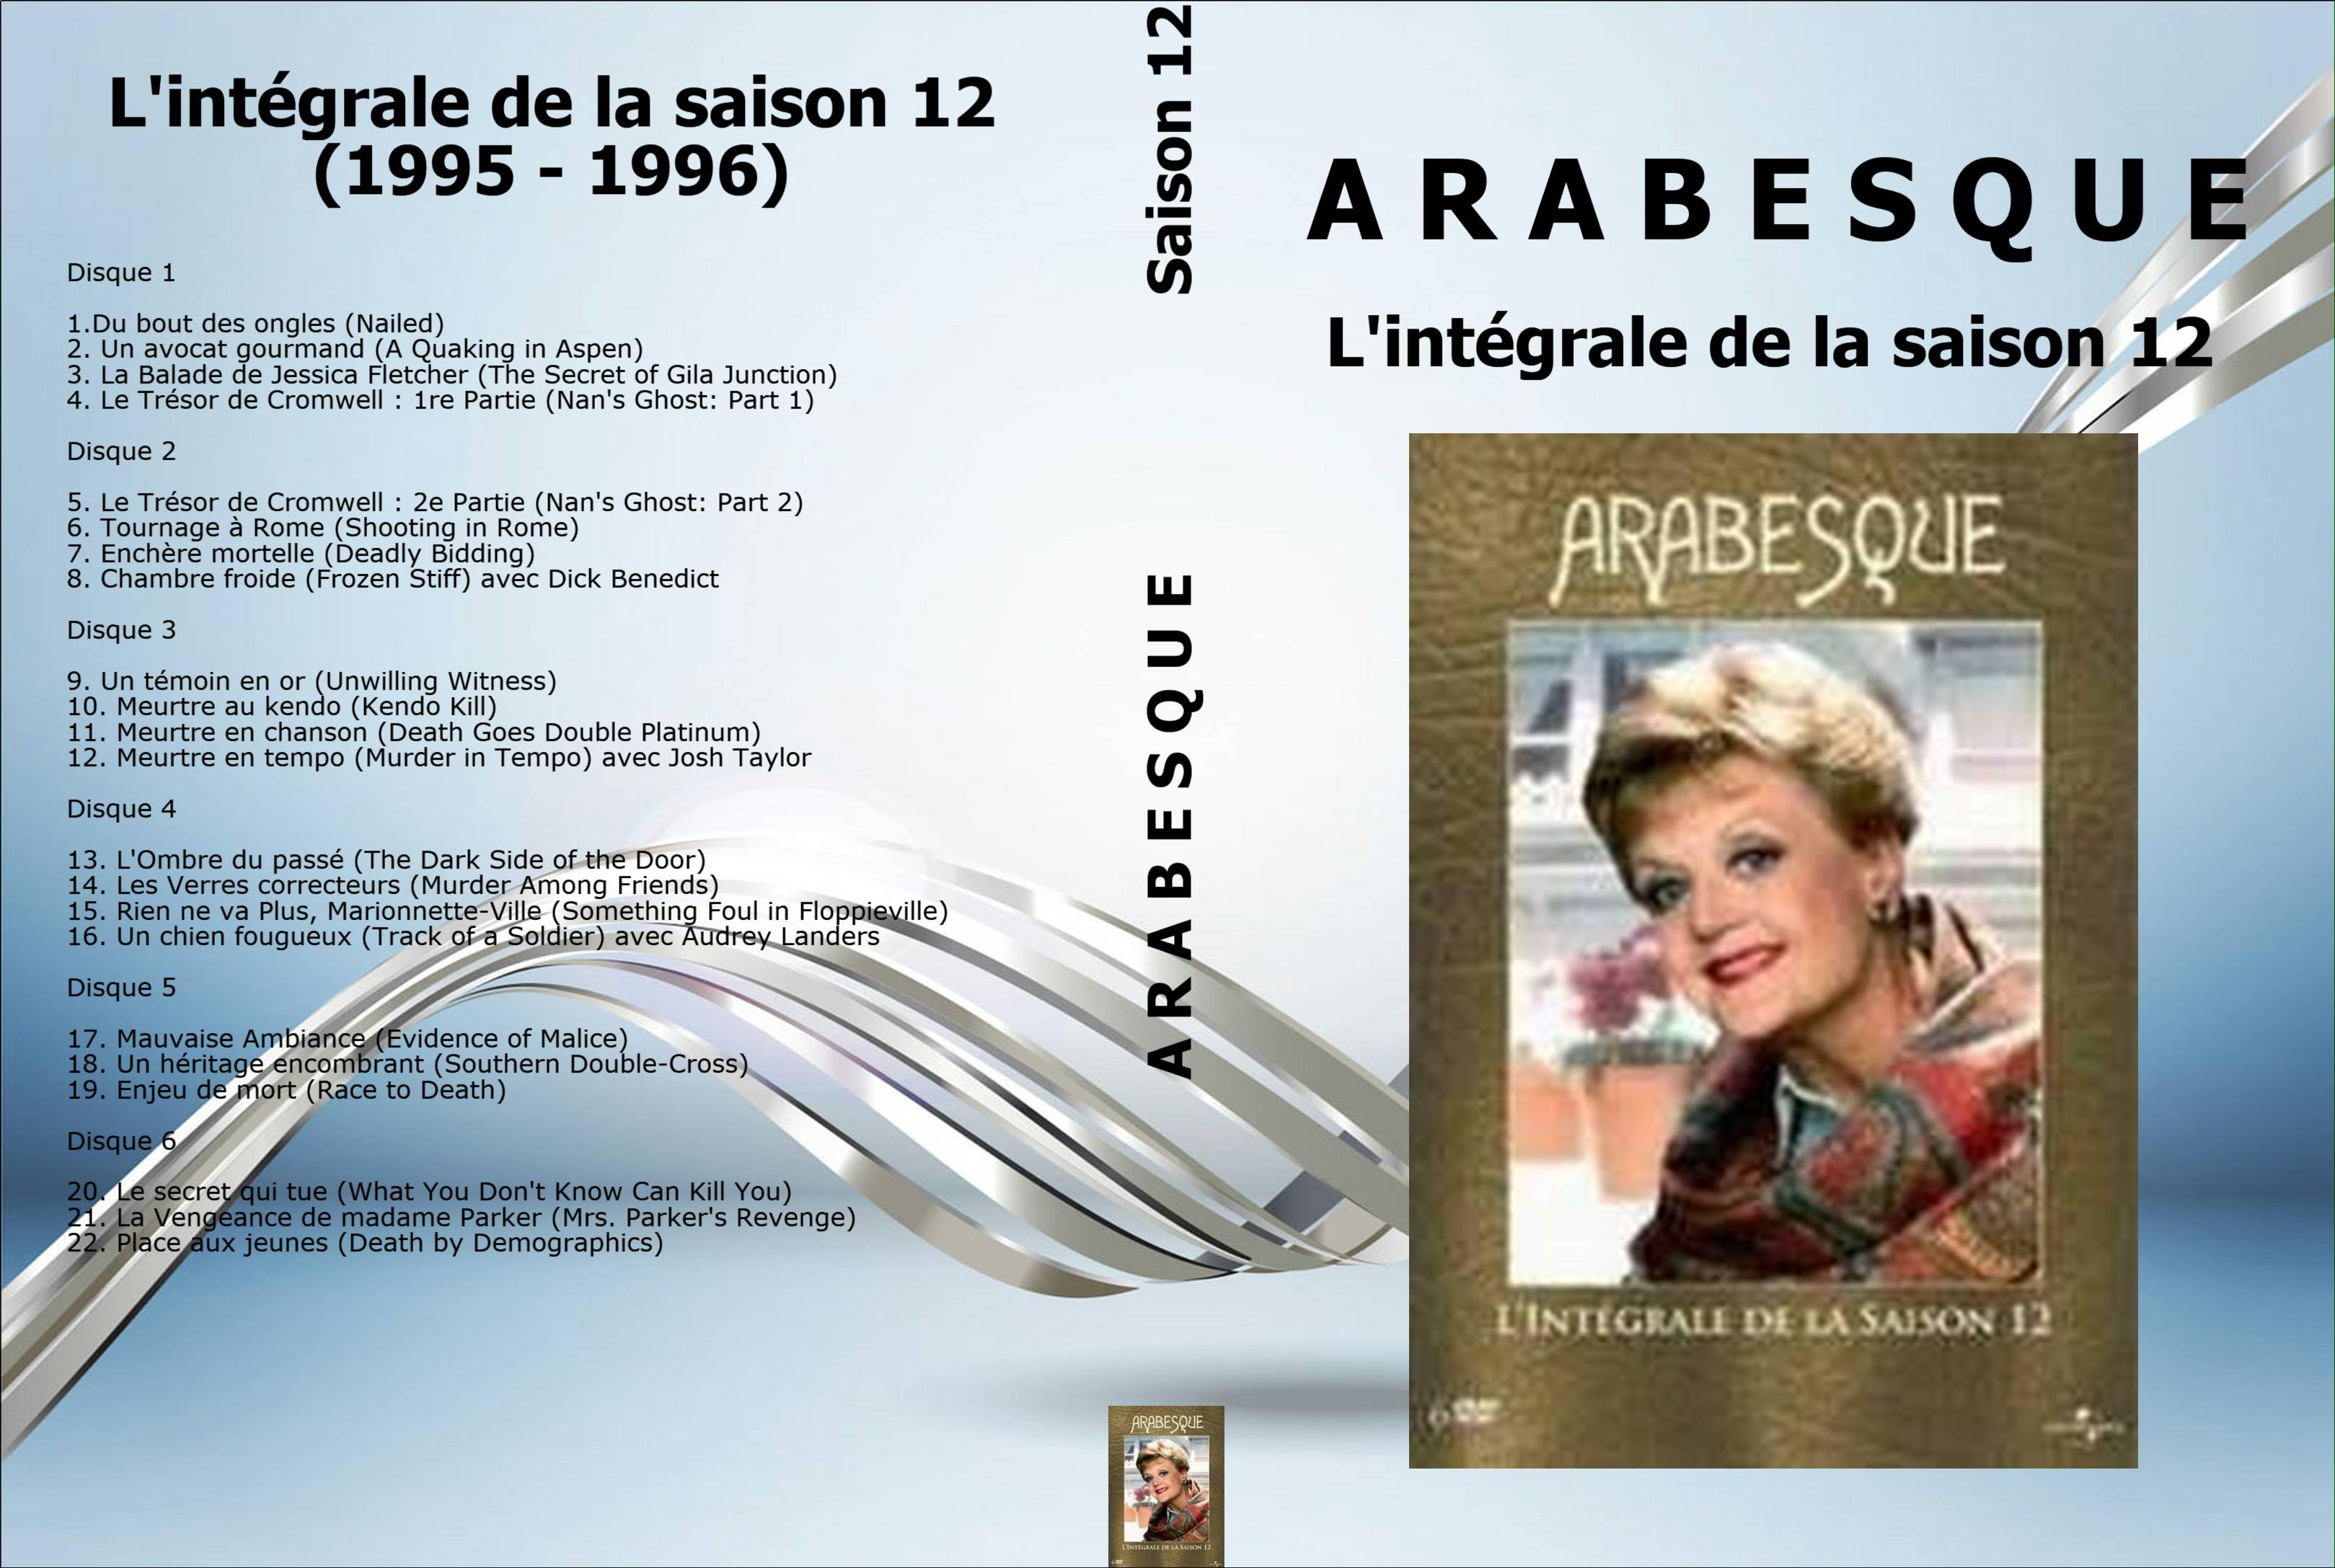 Jaquette DVD Arabesque saison 12 custom